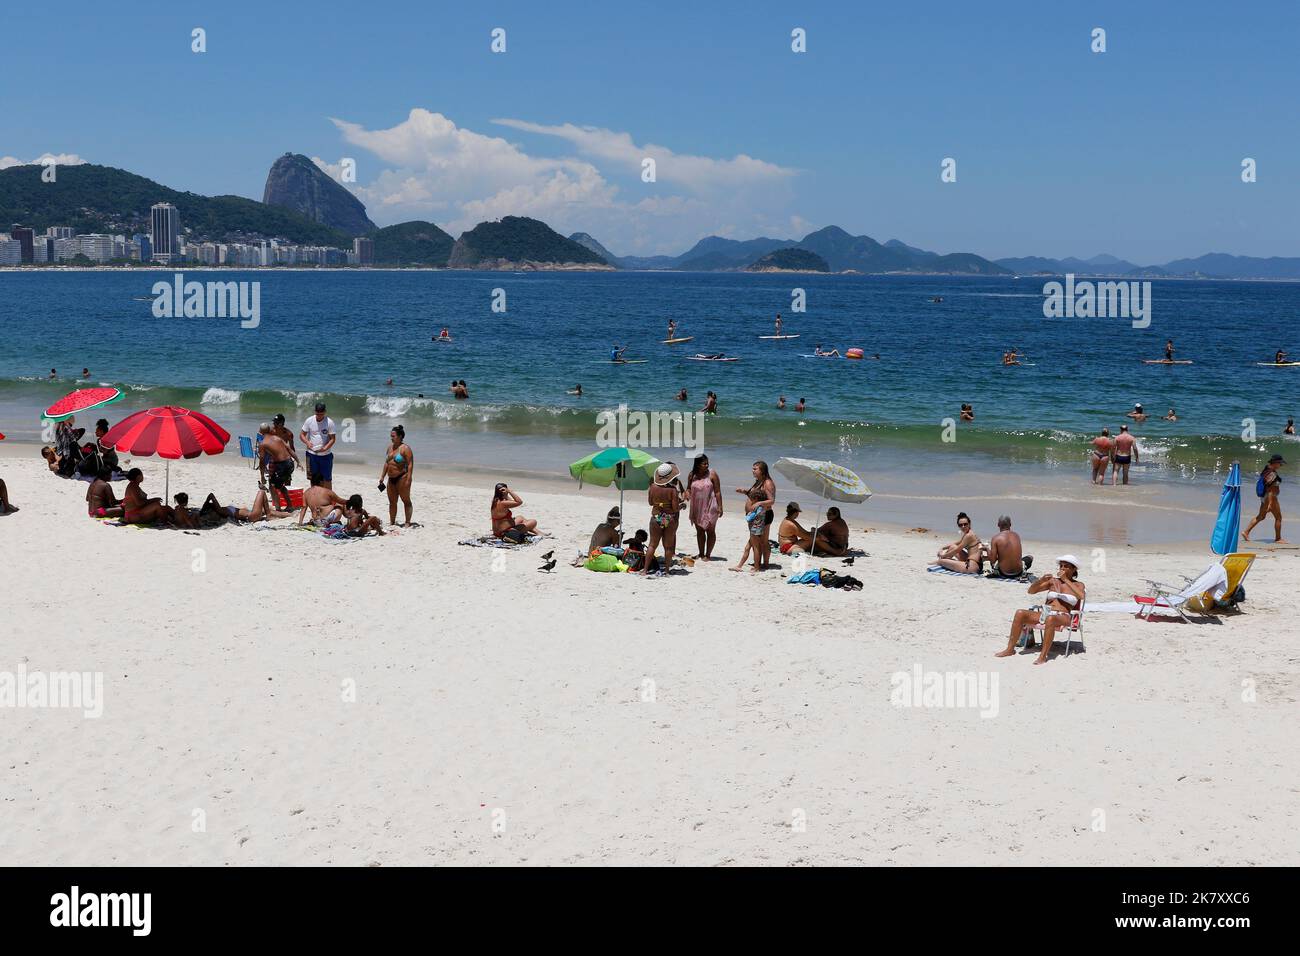 Copacabana beach, Rio de Janeiro, Brazil. People sunbathing near sea shore, colorful umbrellas. Crowd enjoy summer day swimming. Tropical travel place Stock Photo